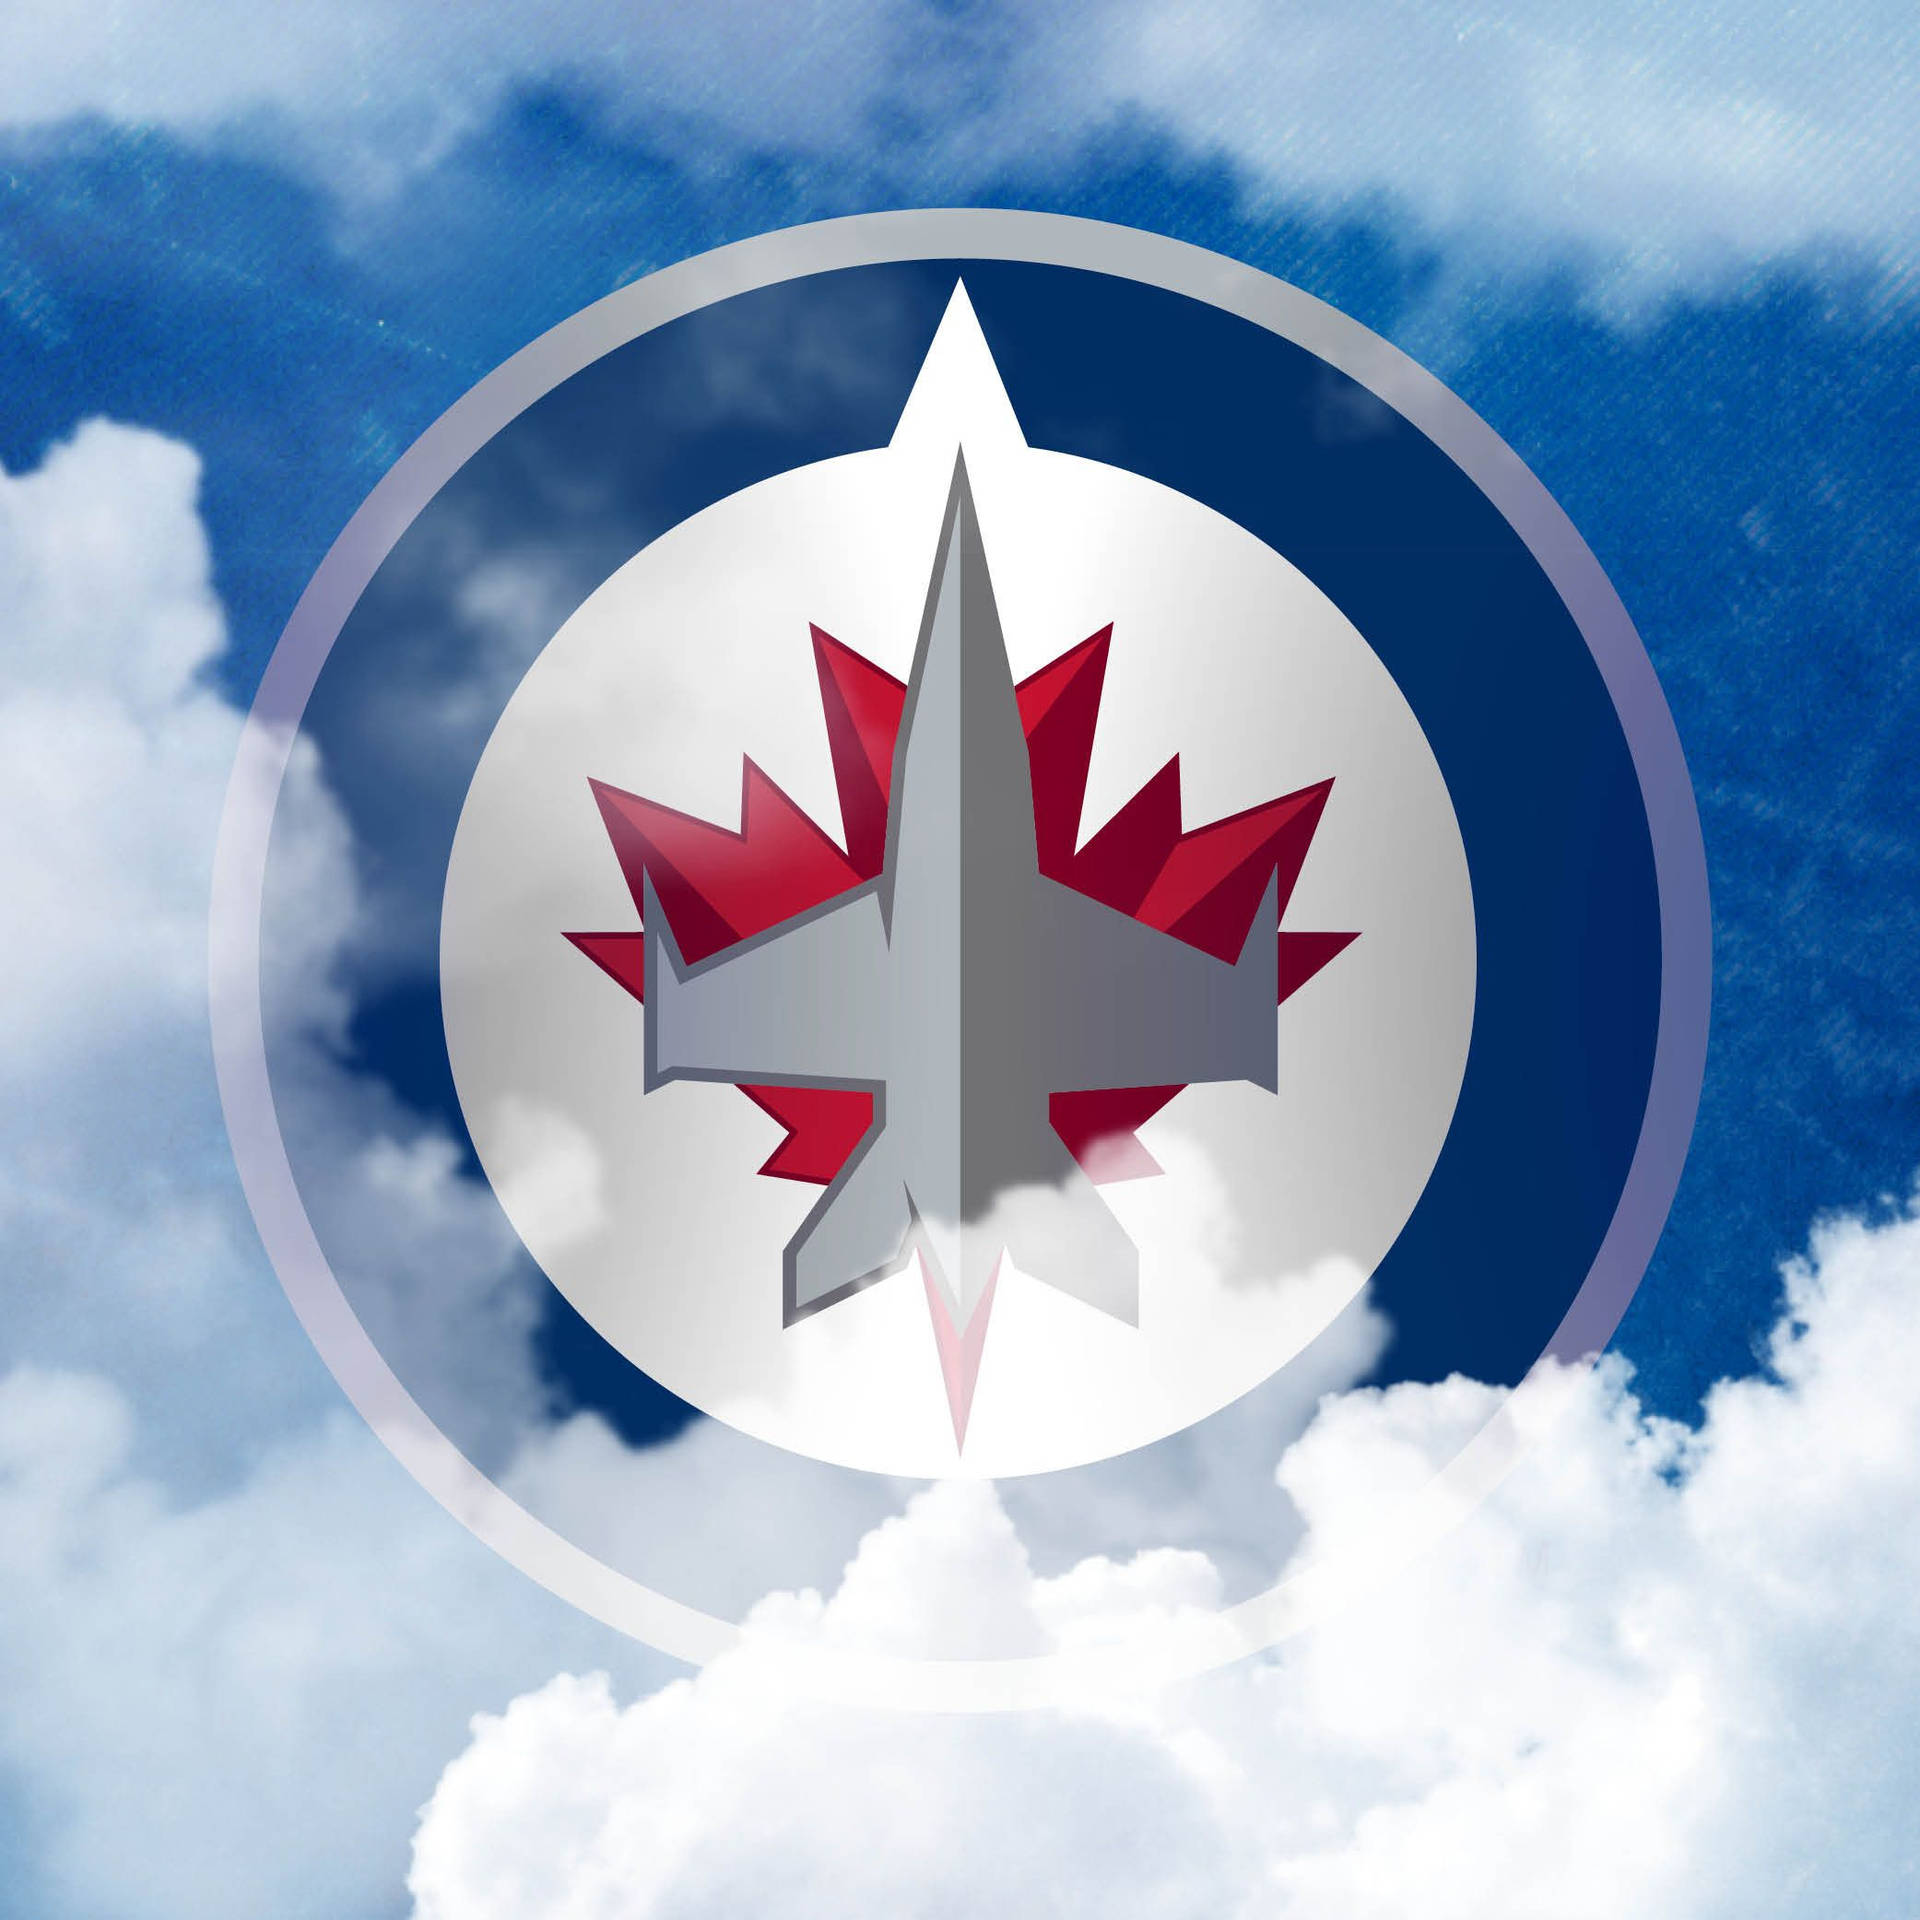 Winnipeg Jets Hockey Team Logo